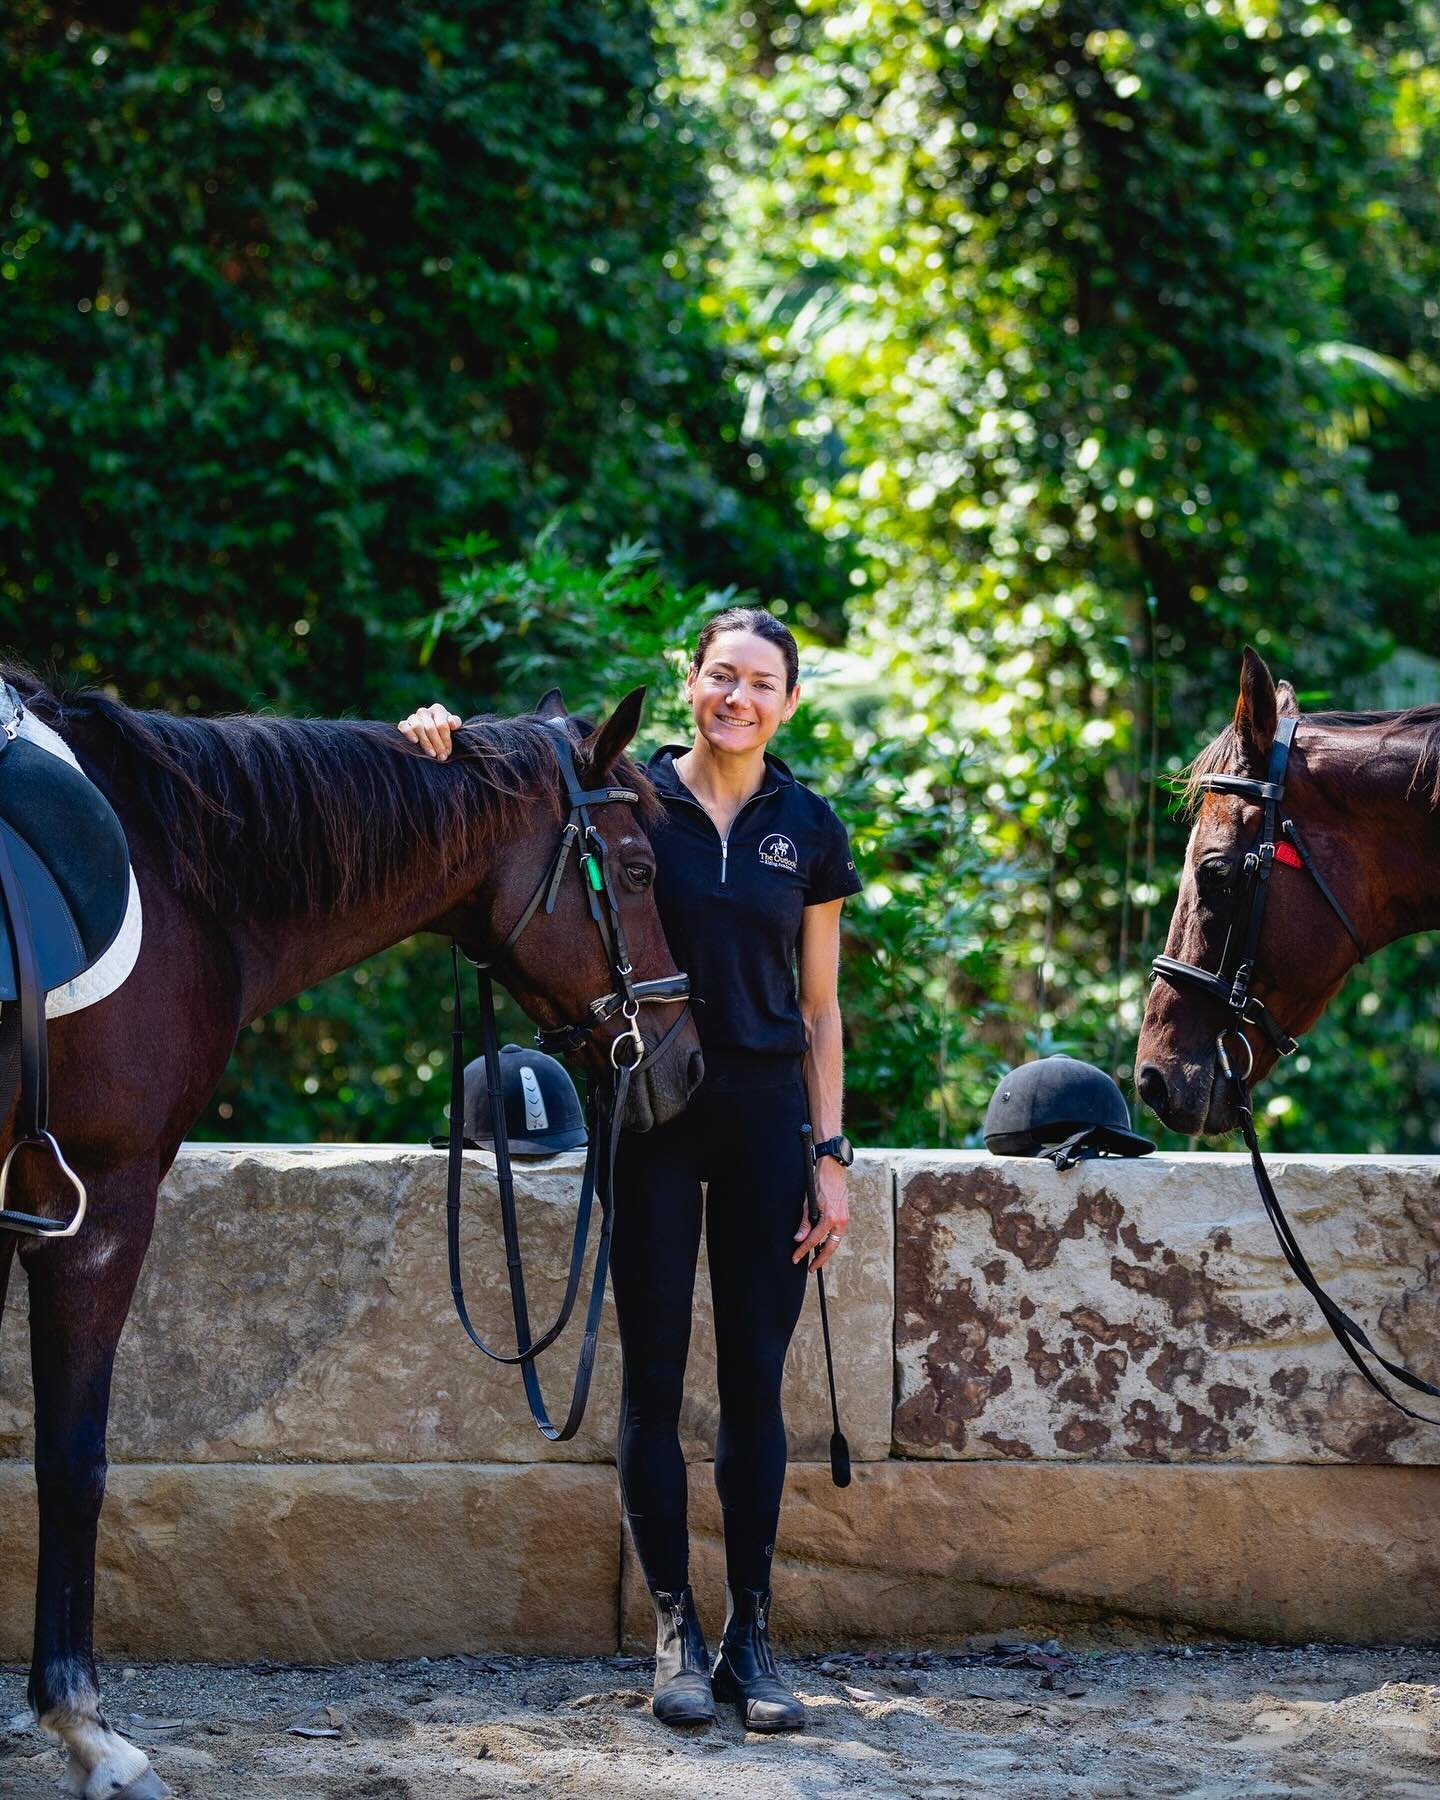 My two favourite things: nature &amp; horses 🌿🐴

Captured by @eddrobertson 
.
.
.
.
.
.
#centralcoast #centralcoastnsw  #horses  #lovecentralcoast #whatsonsydney #tourismnsw #terrigal #horseriding #ExploreSydney #SydneyAdventures #Ilovesydney #love